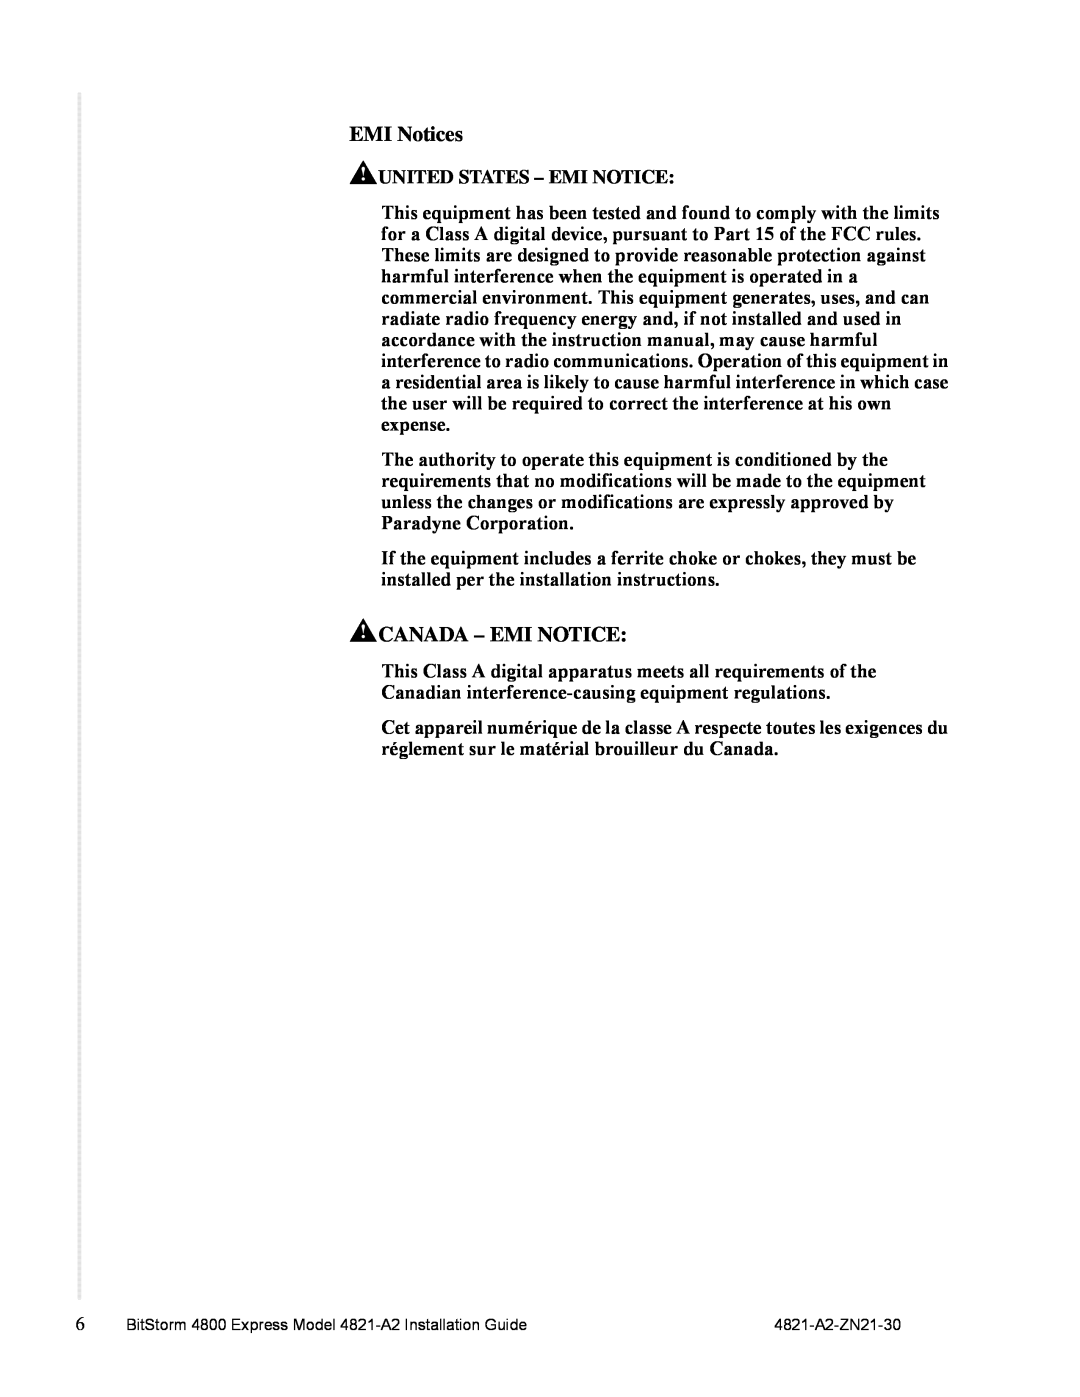 Zhone Technologies 4821-A2 manual EMI Notices, Canada - Emi Notice 